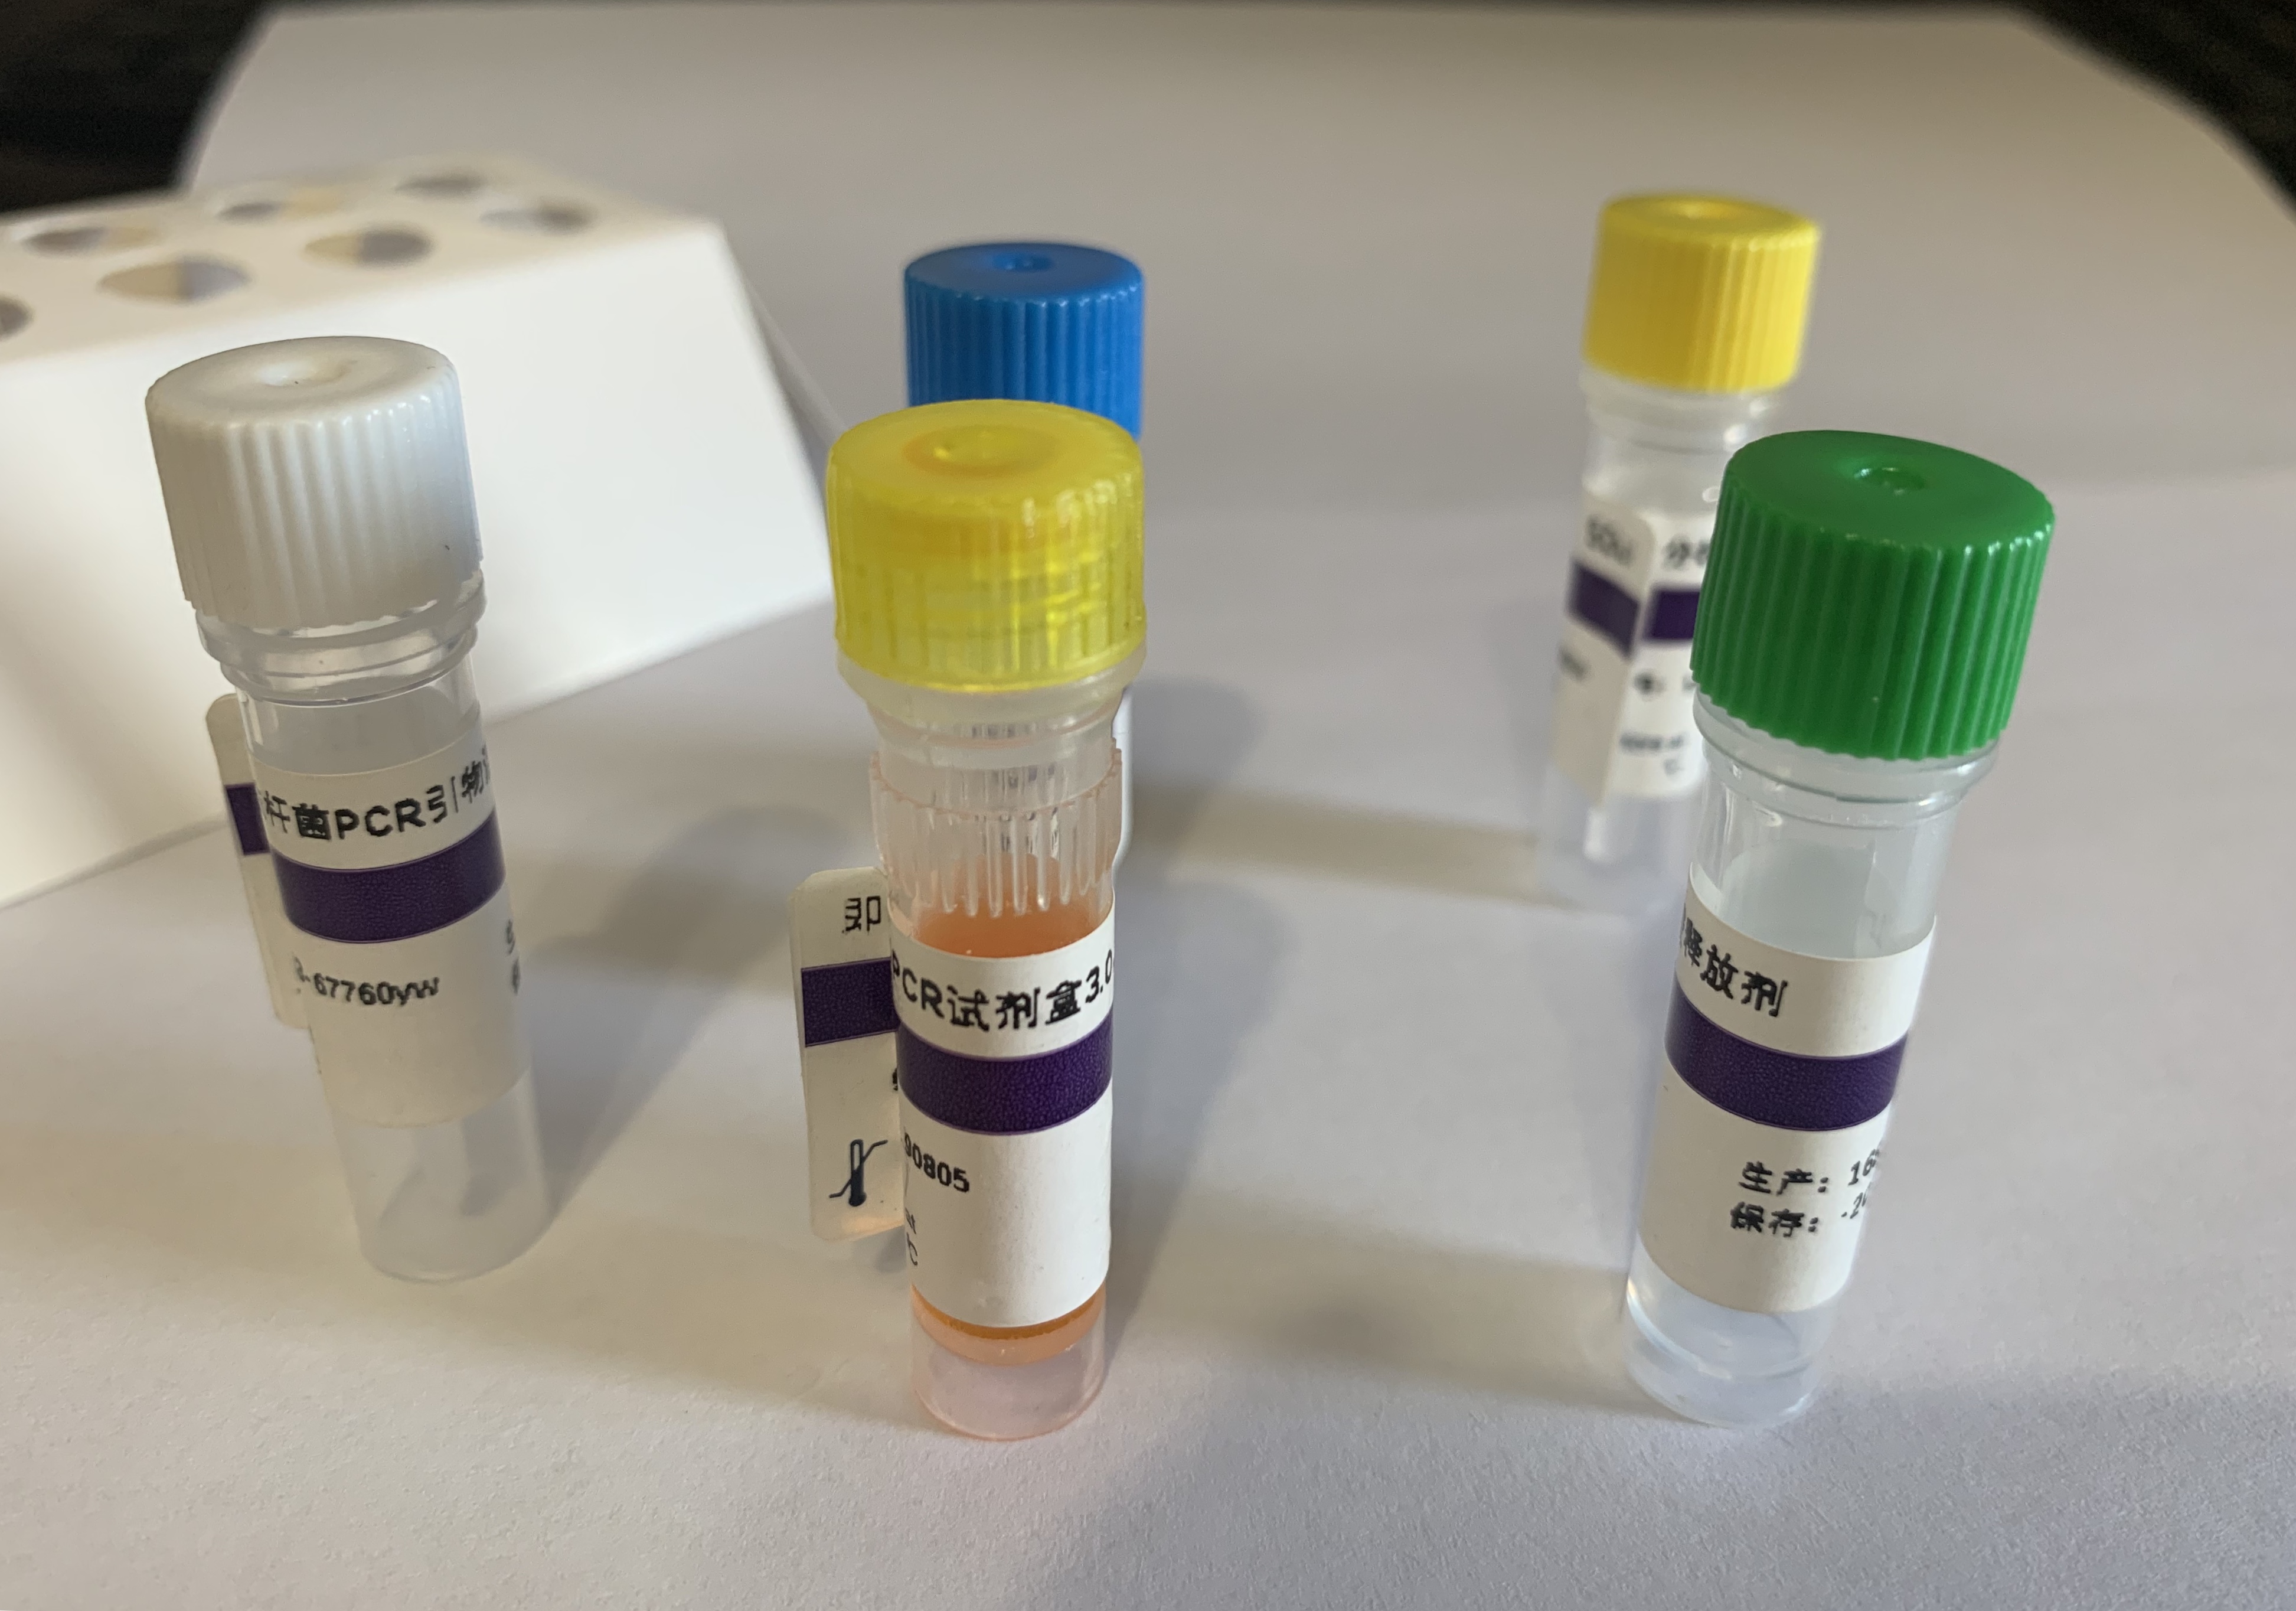 HIV-2前病毒探针法荧光定量PCR试剂盒